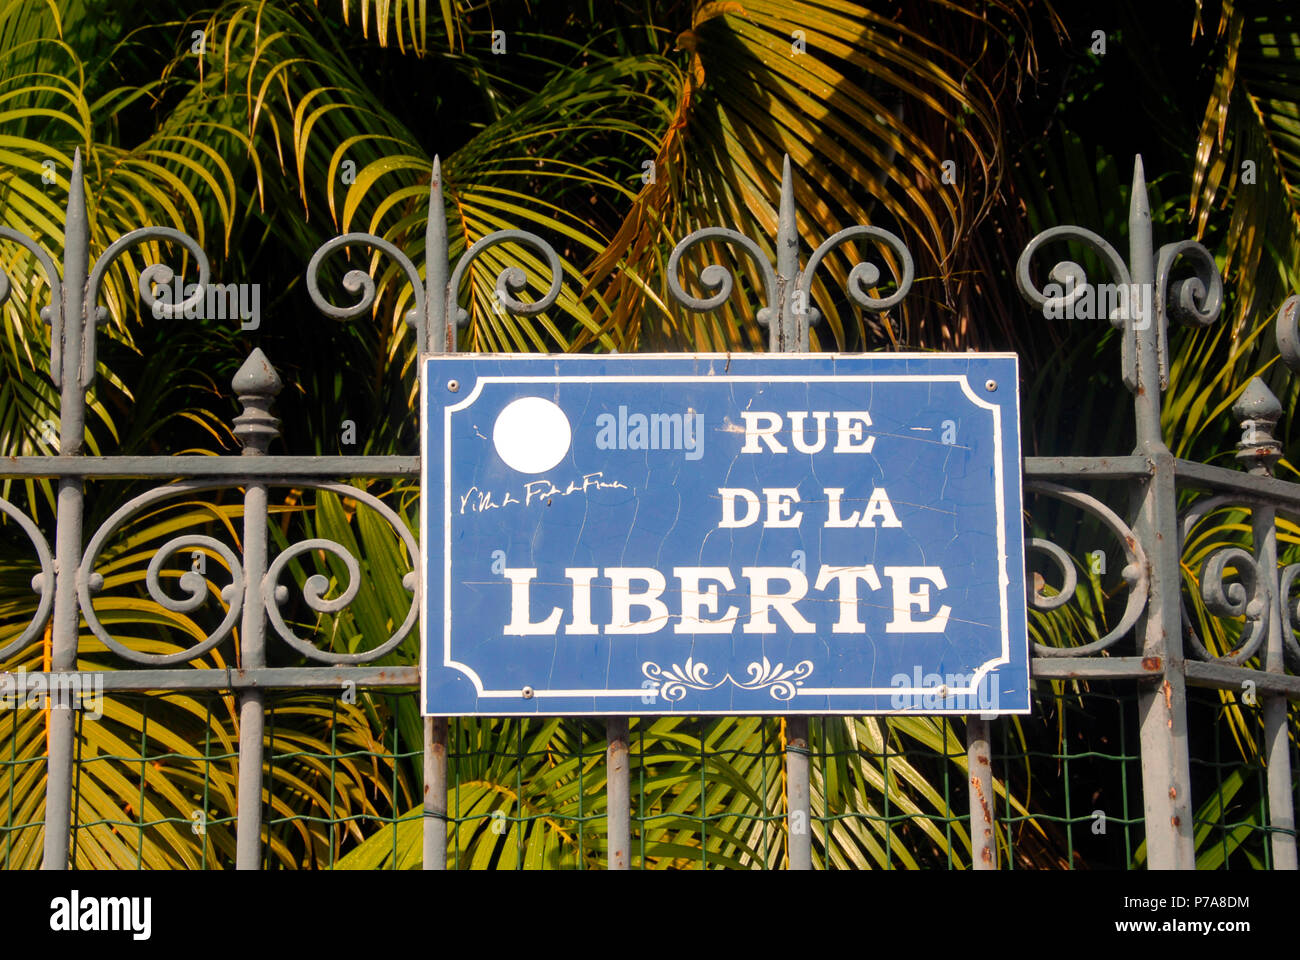 Street name sign 'Rue de la Liberte' in white lettering on blue background, mounted on railings, Fort de France, Martinique, Caribbean Stock Photo